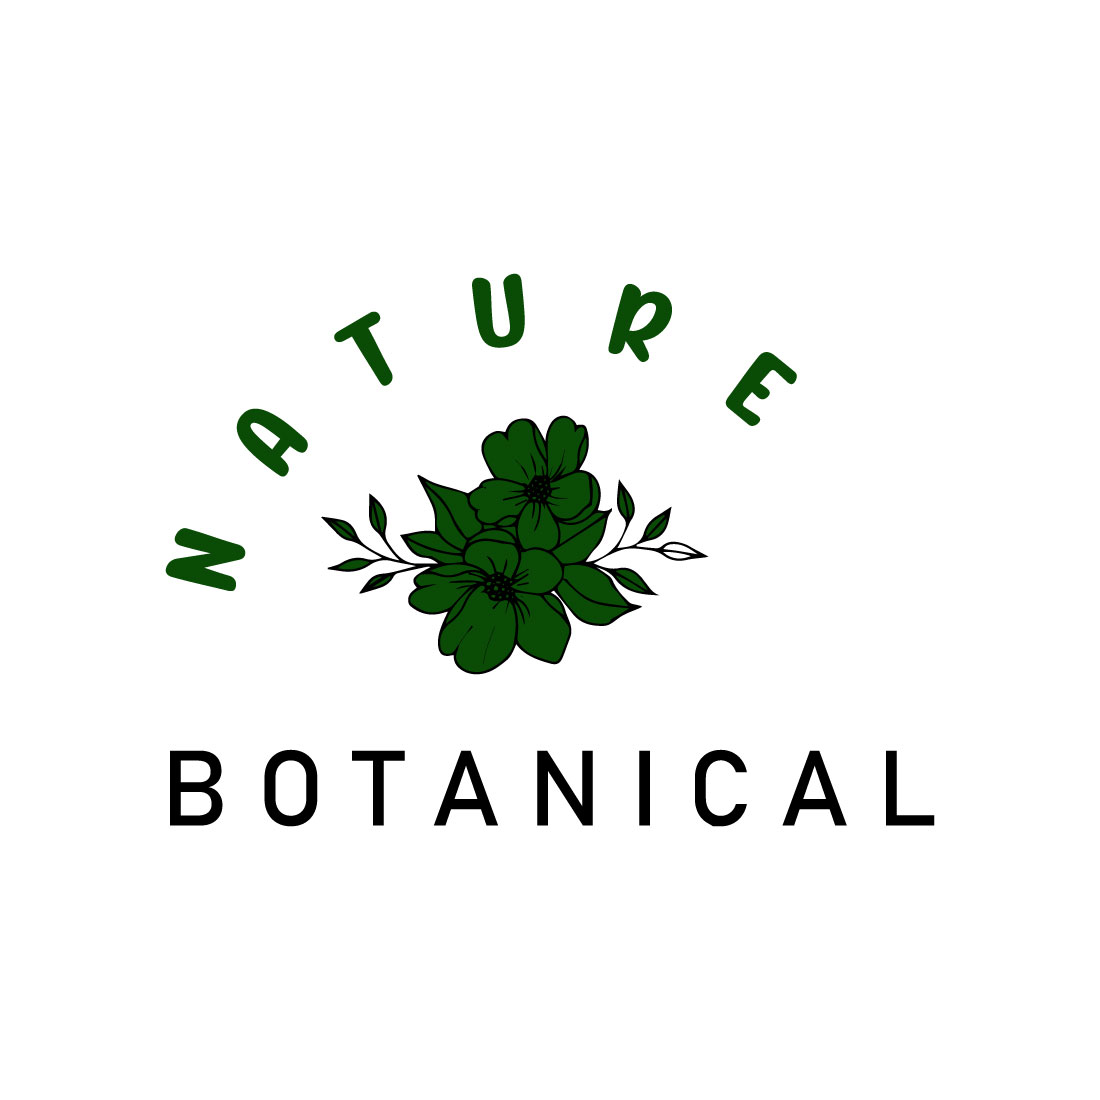 Free sketch hand drawn botanical logo cover image.